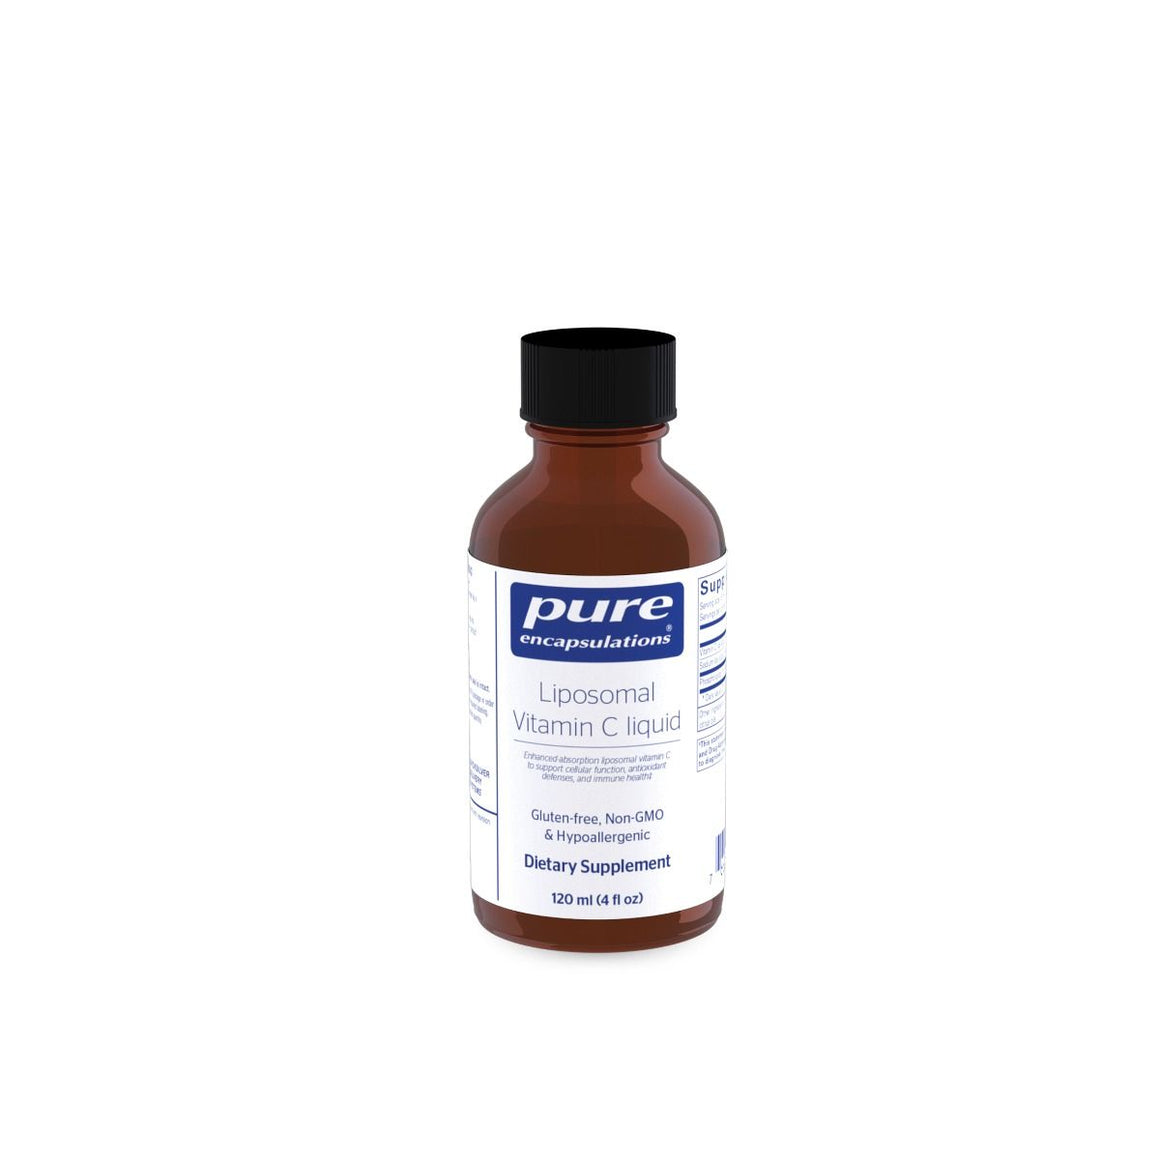 A bottle of Pure Liposomal Vitamin C liquid